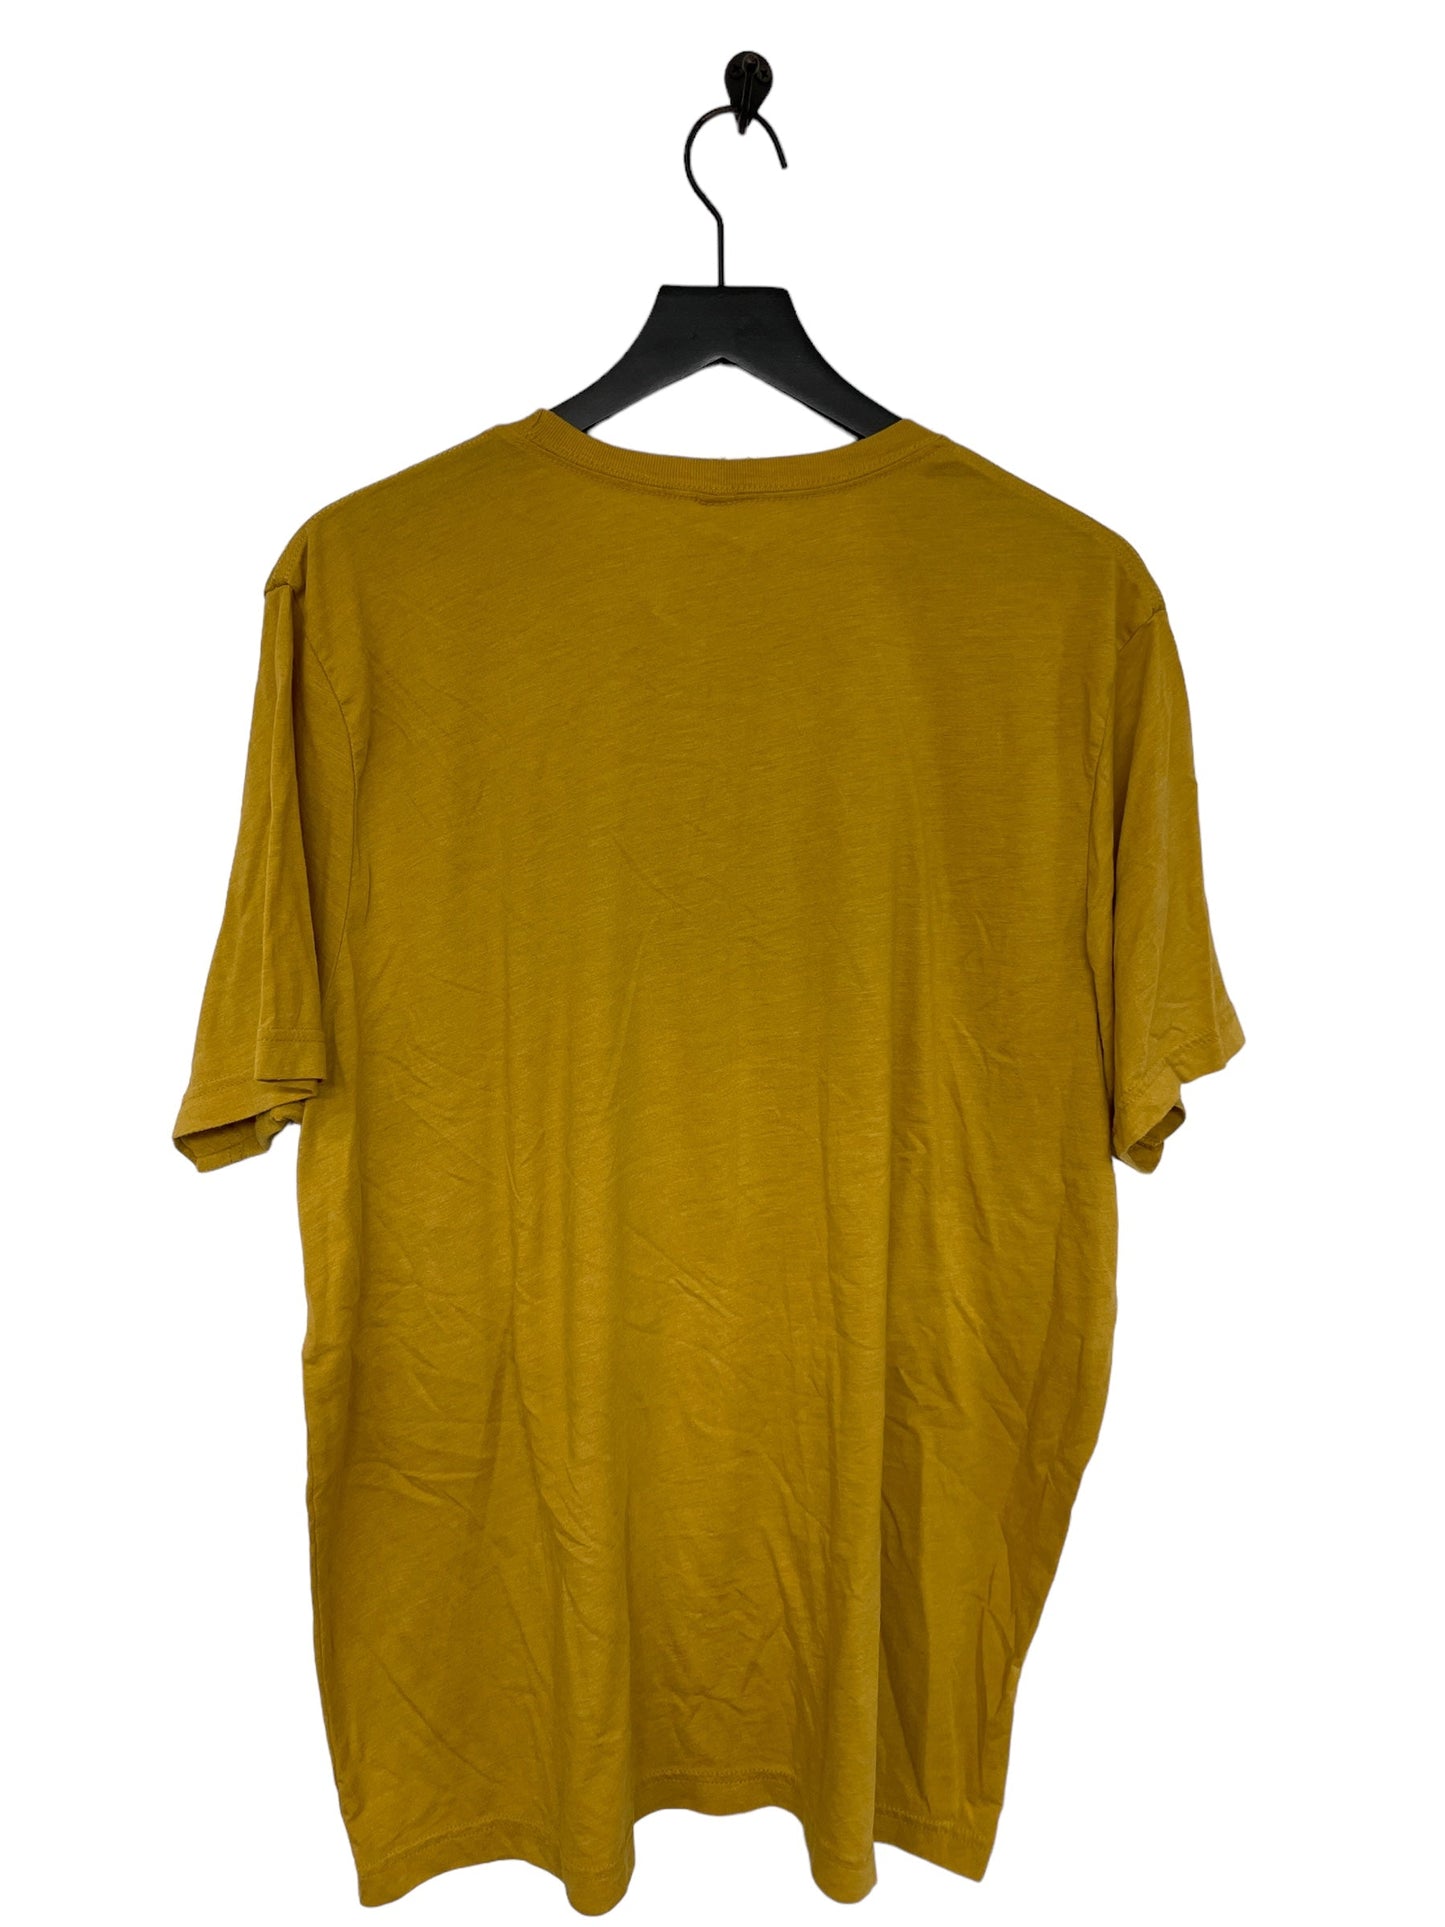 Yellow Top Short Sleeve Basic Bella + Canvas, Size 2x